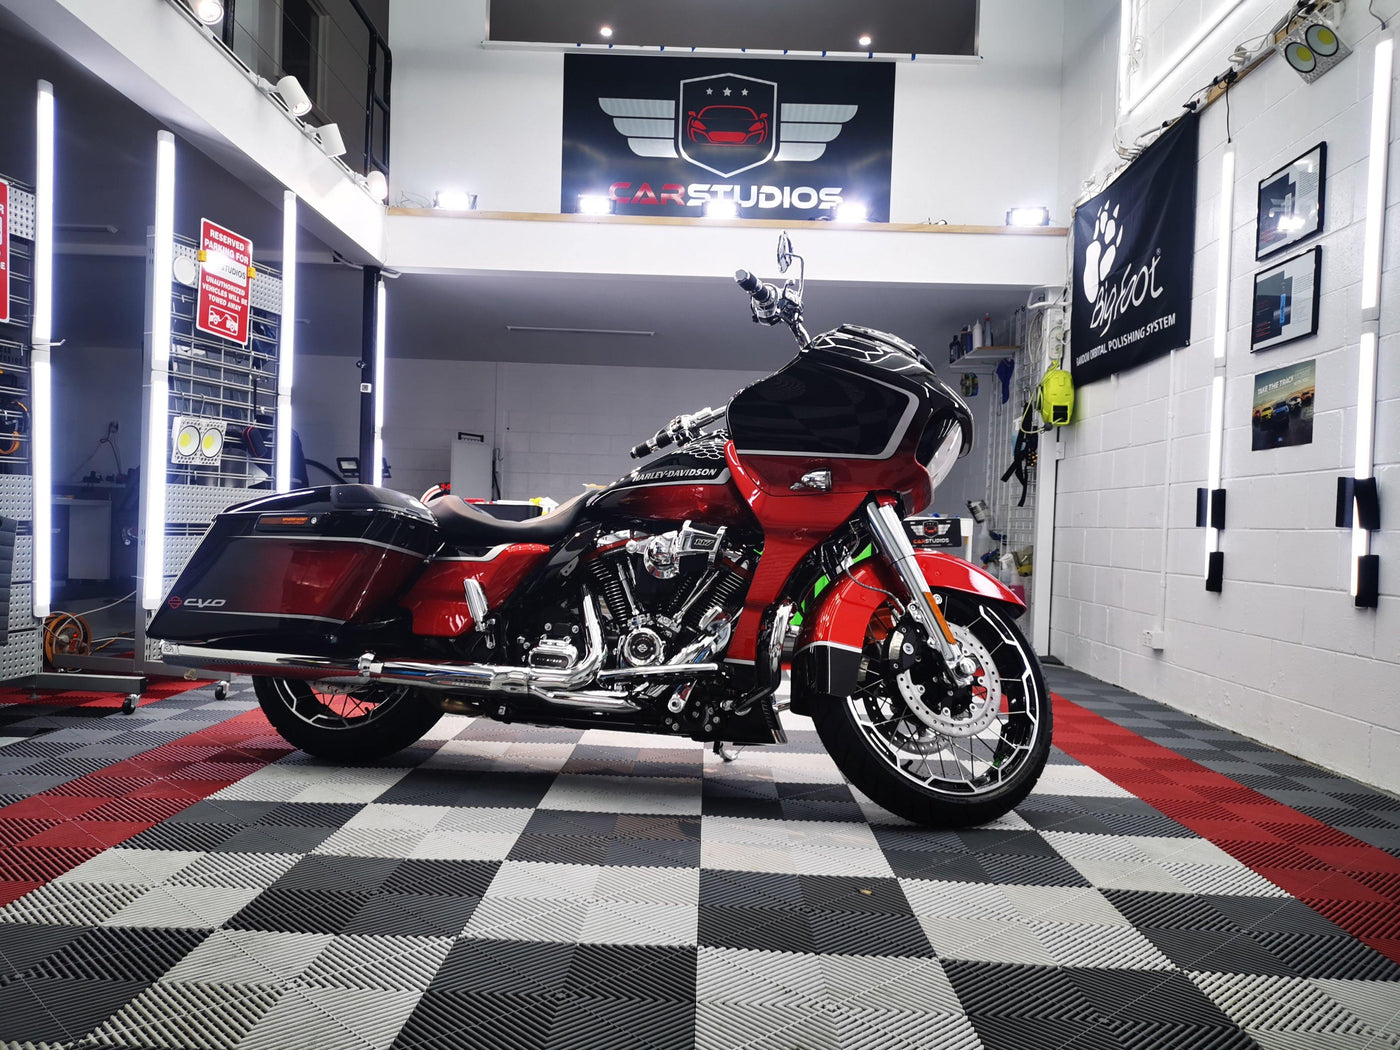 Harley Davidson - Car Studios